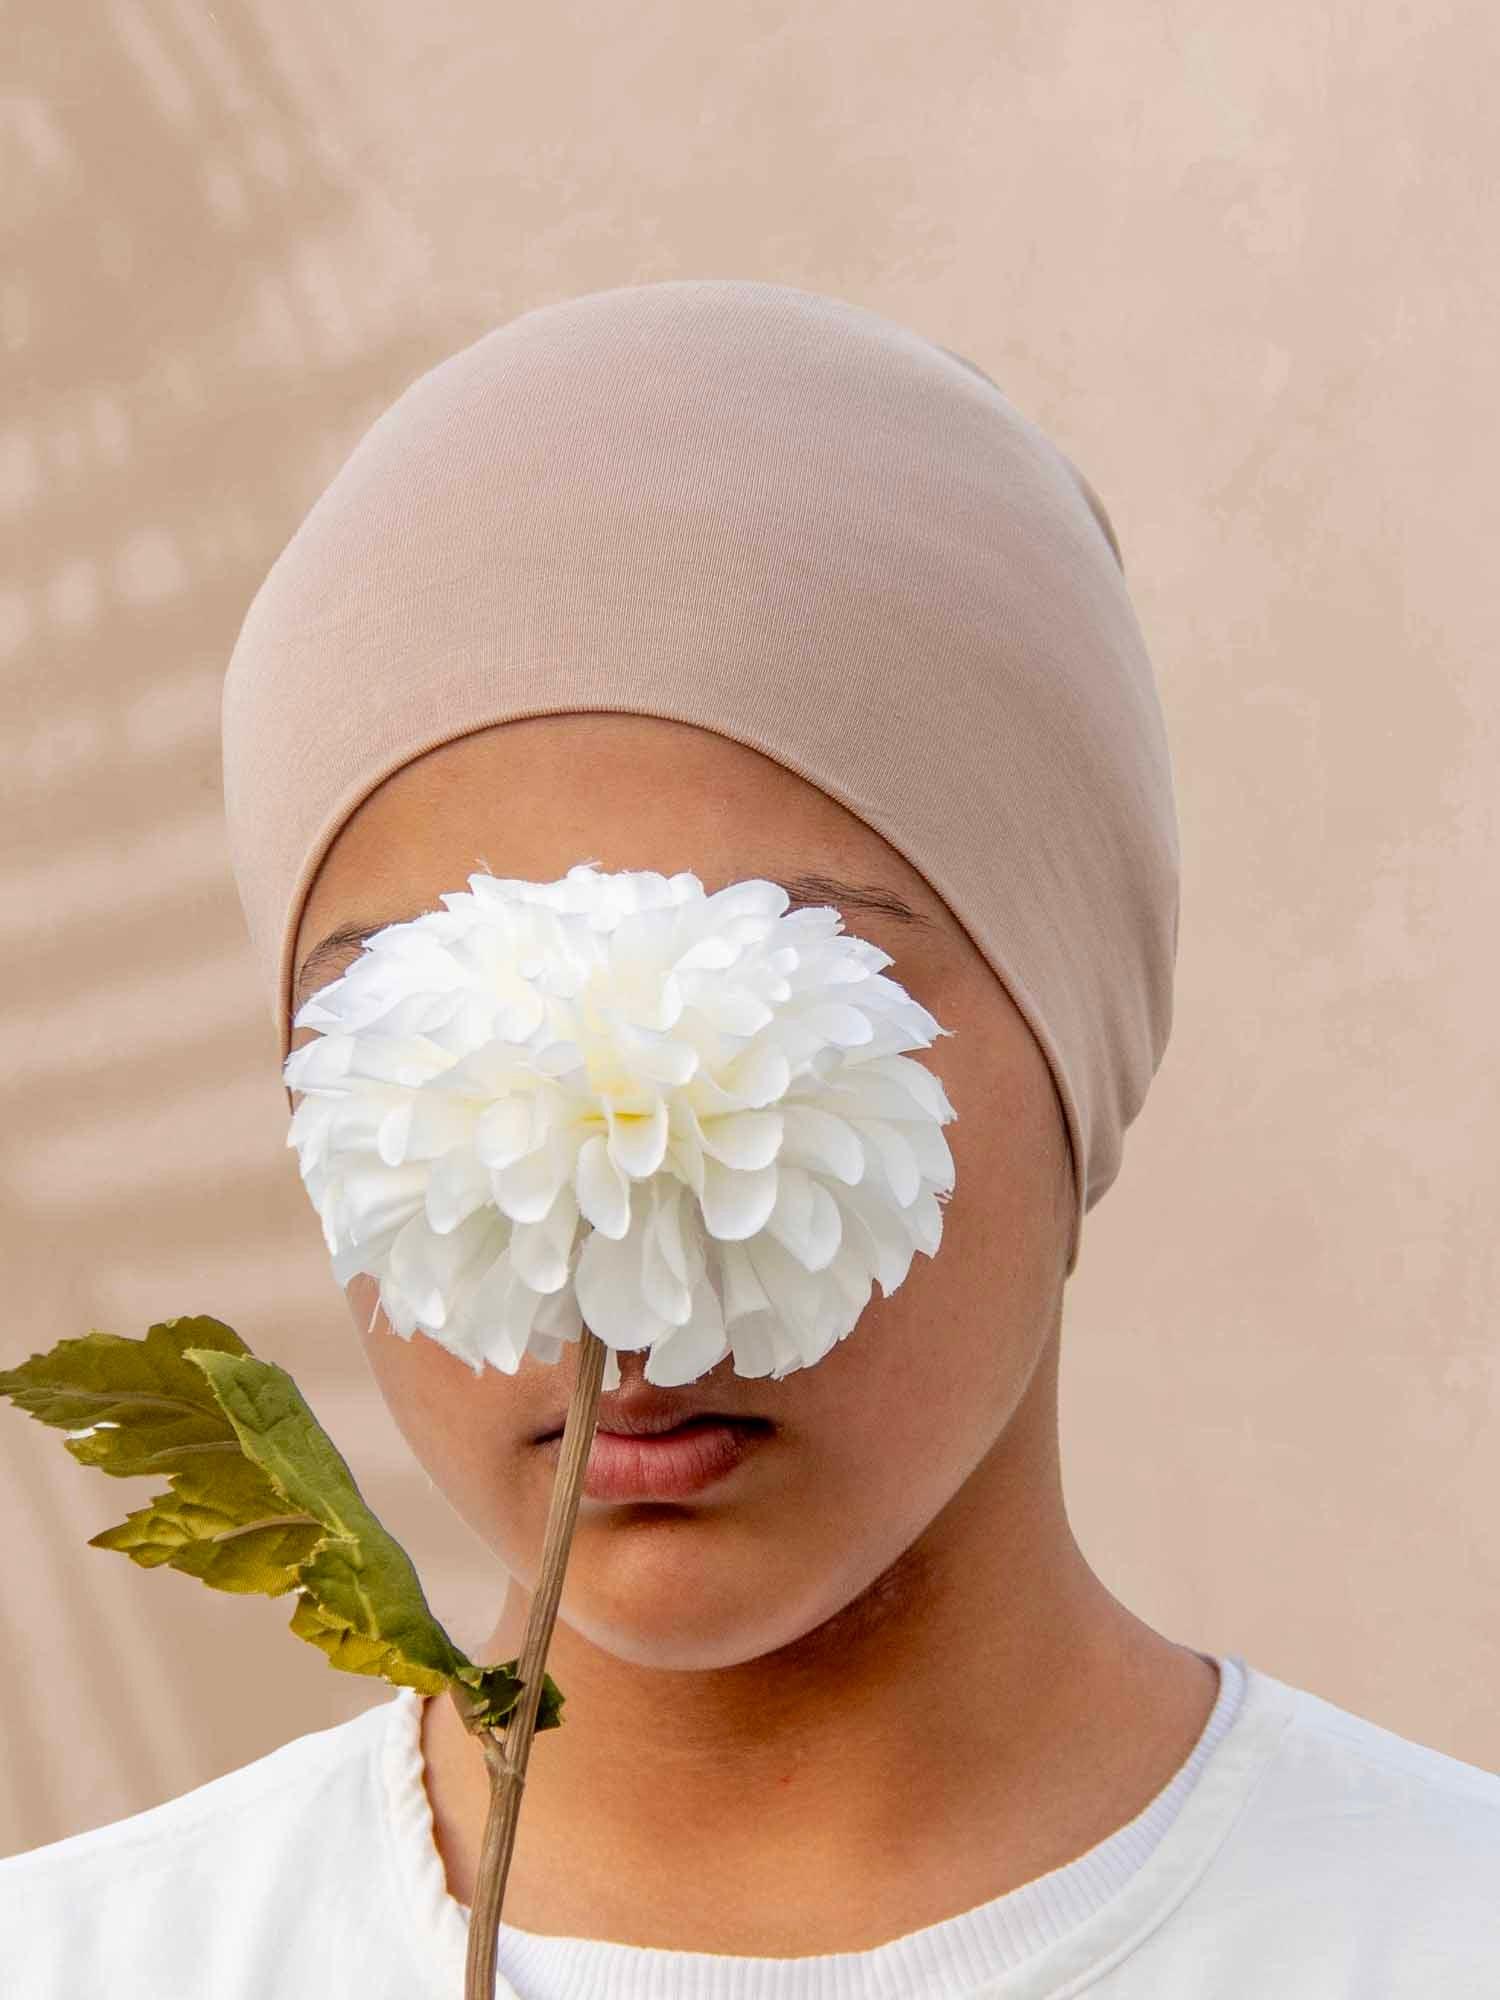 ComfortPlus Bamboo Hijab Cap in Sand - BubbleGirl